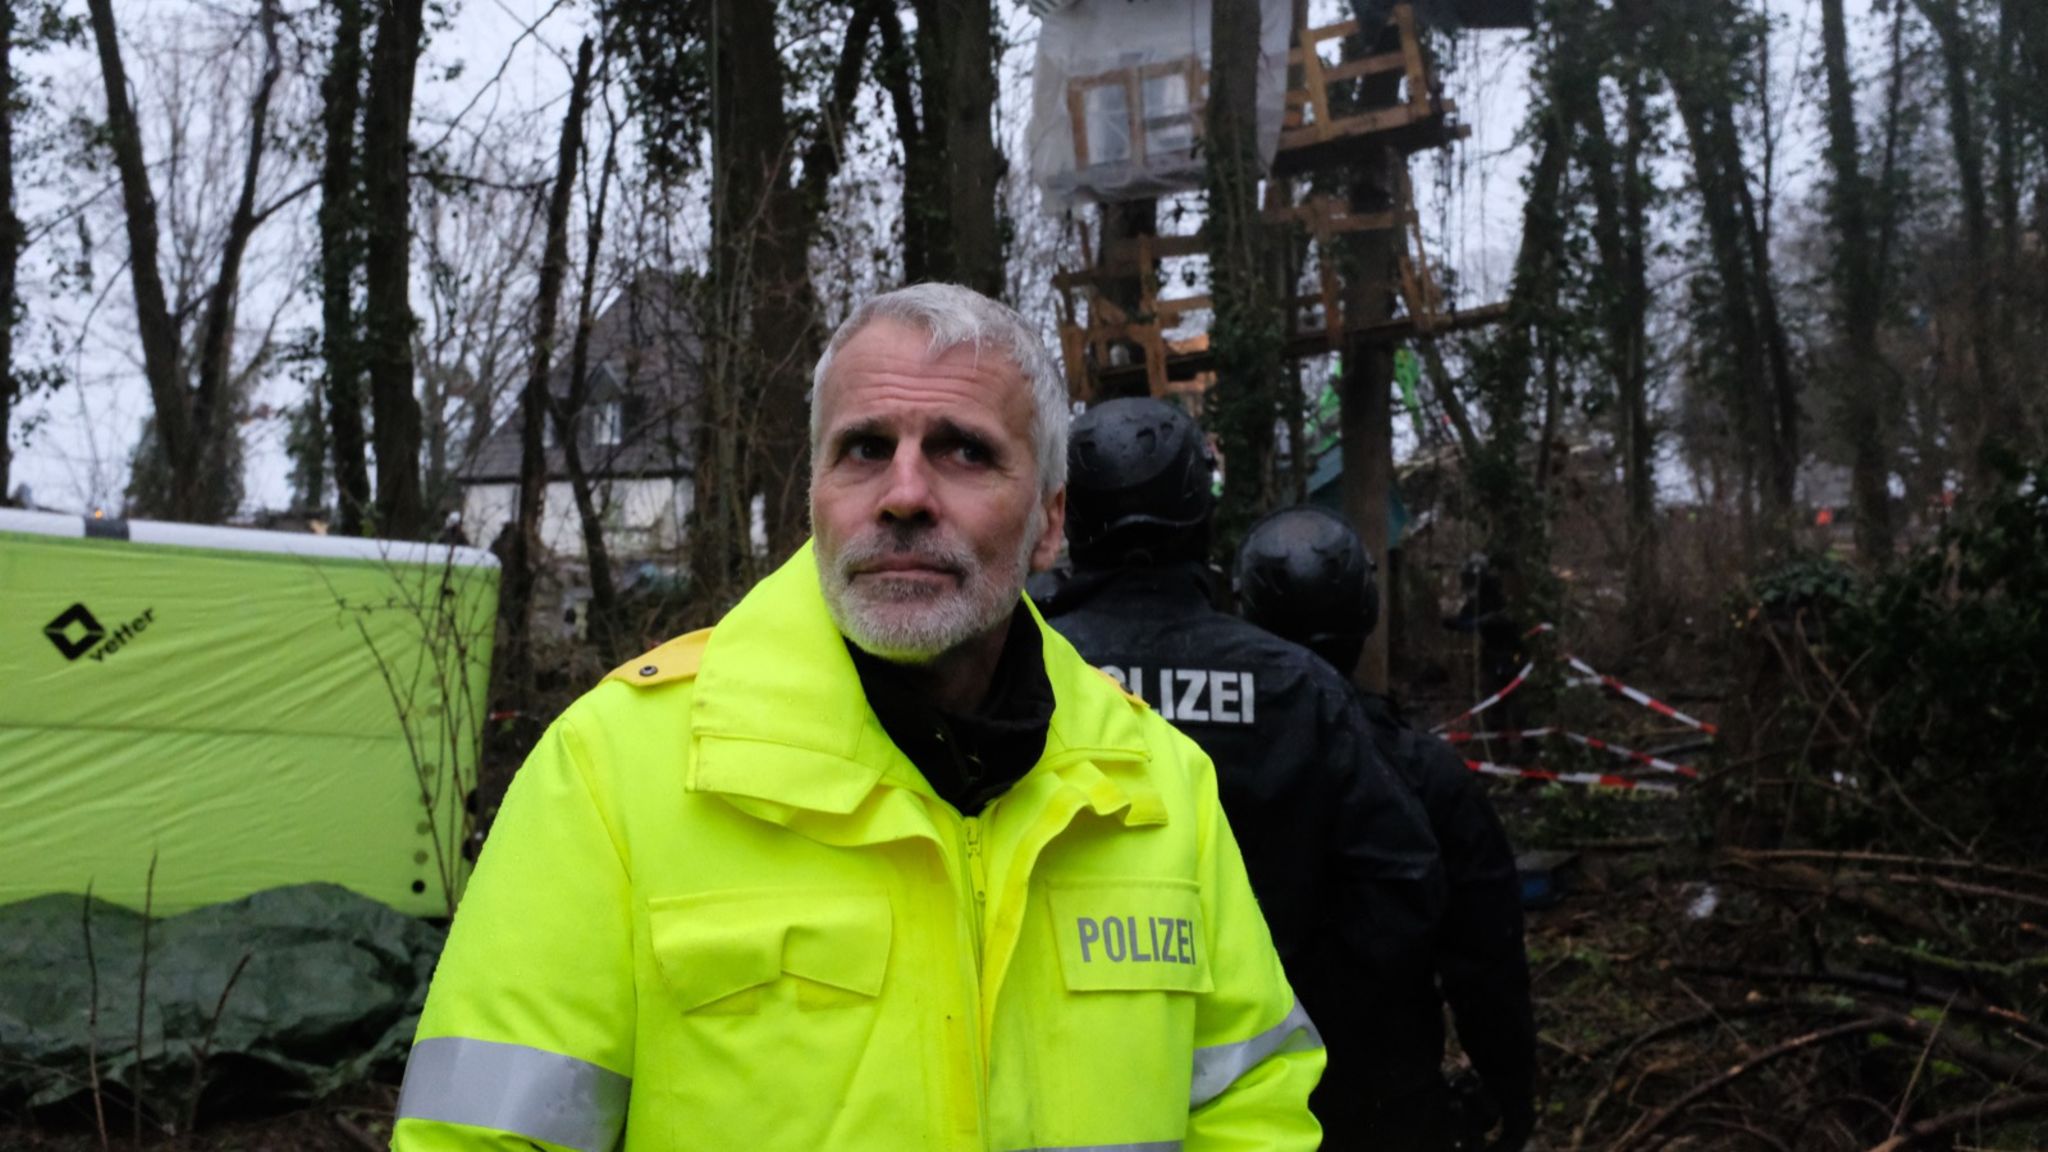 Polizei NRW Aachen - Kurioser Kriminalfall - wir klären auf